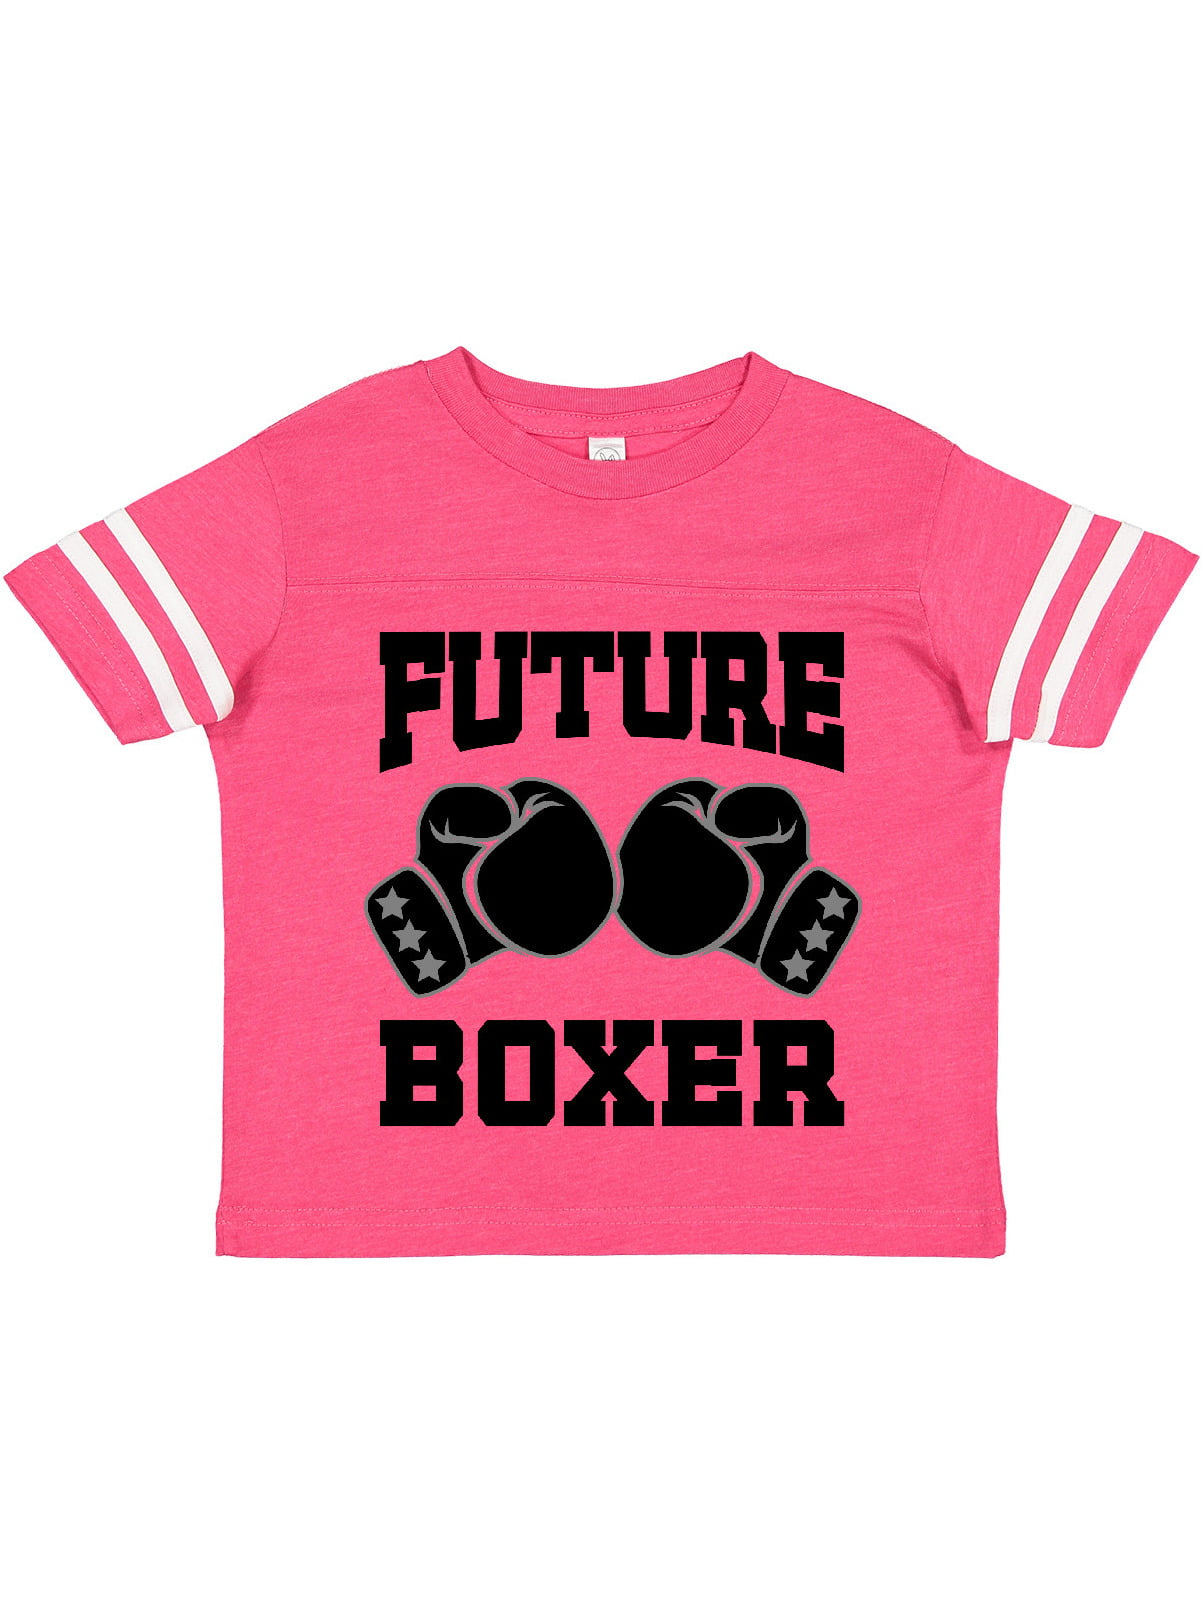 Boxing Boxer Children's Kids T Shirt 